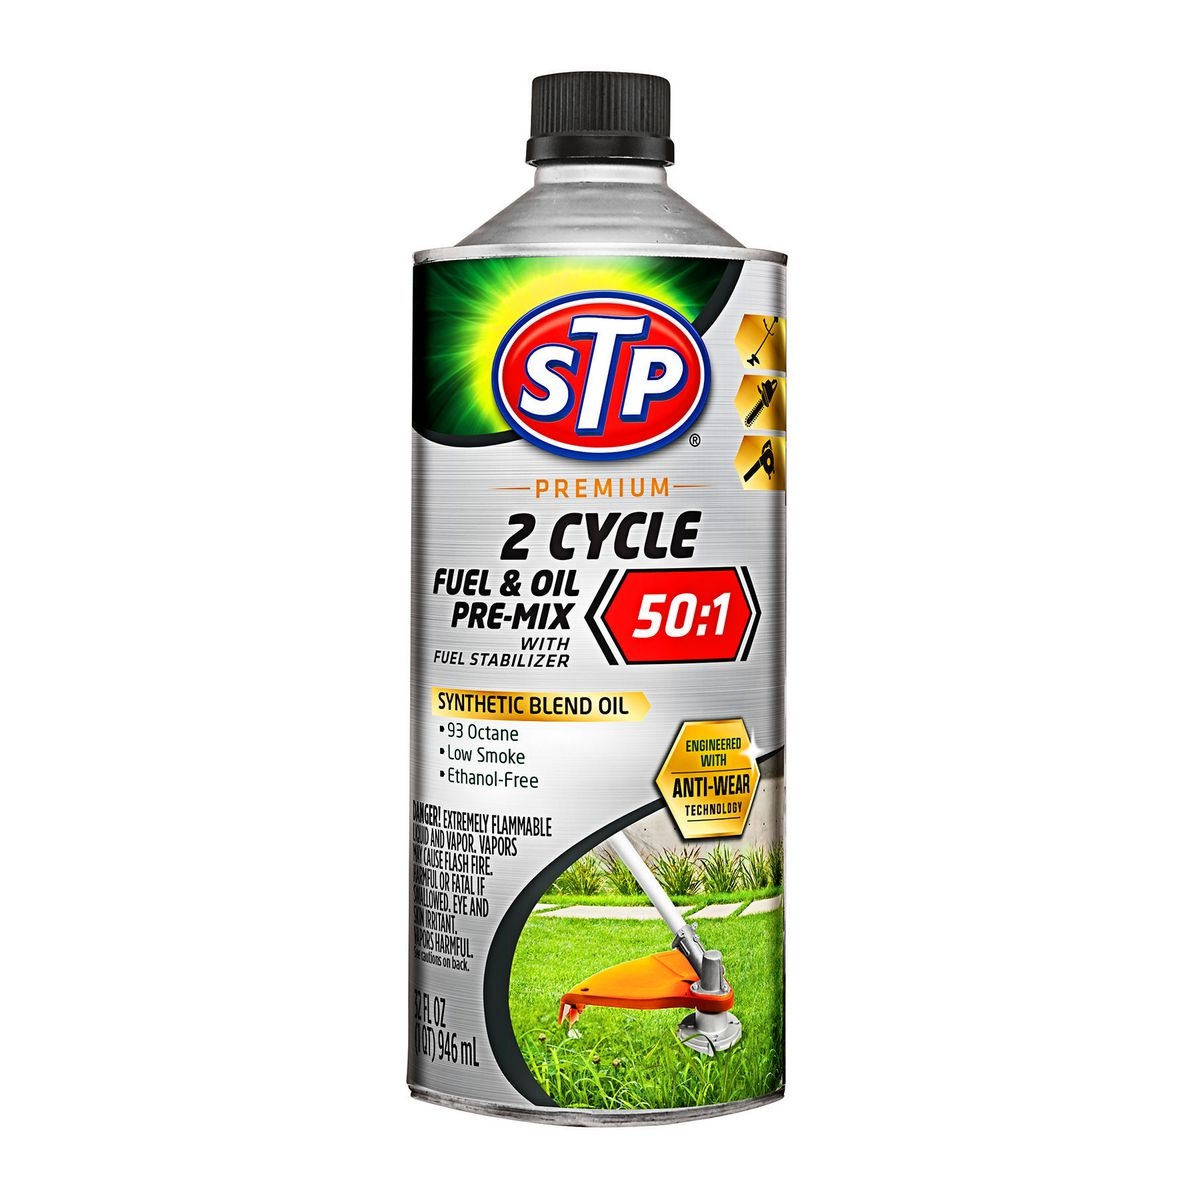 STP 32 oz. 50:1 Premix Fuel/Oil - Item 56837